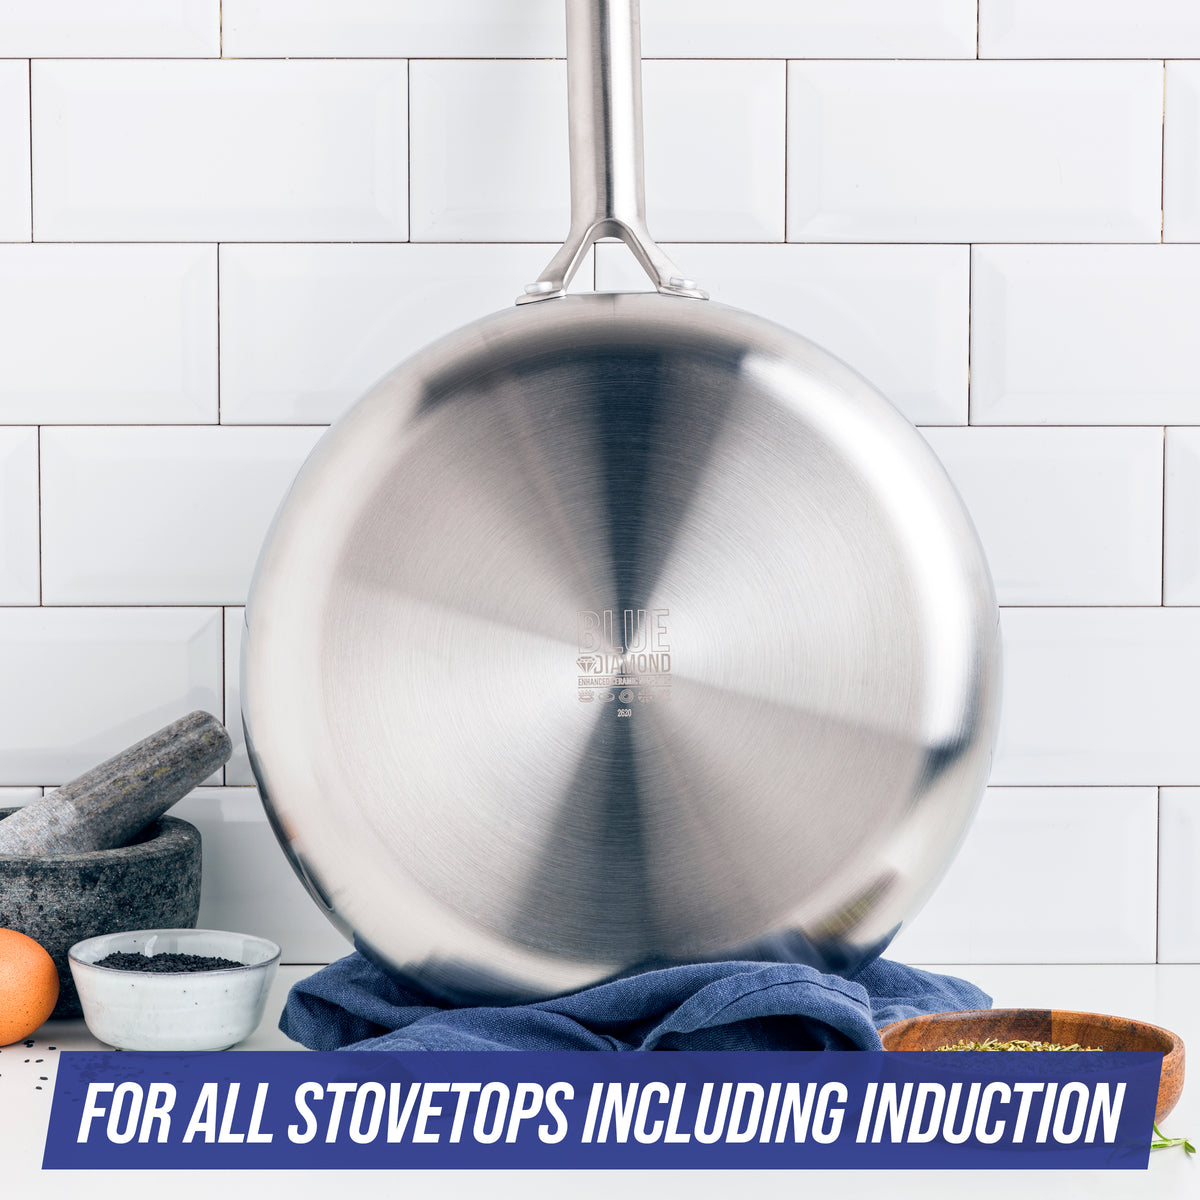 8 Stainless Steel Frying Pan